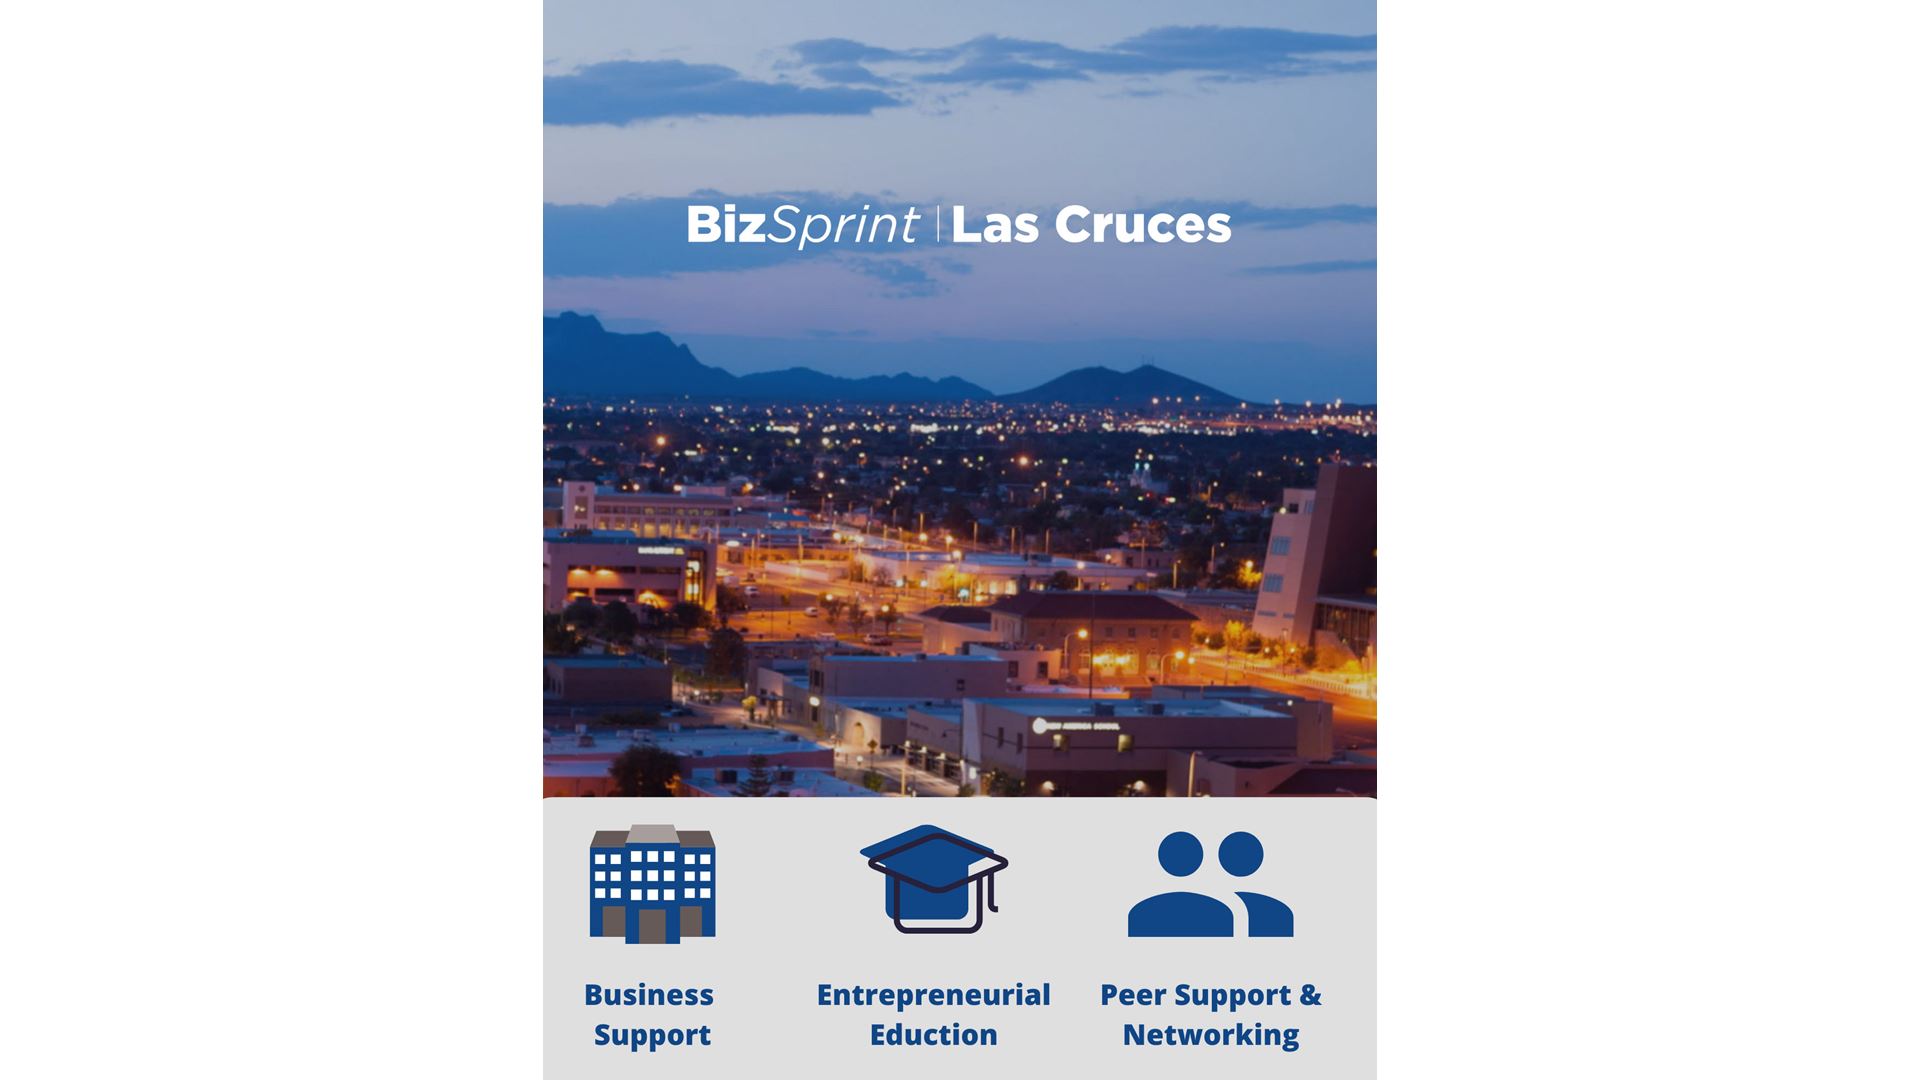 Arrowhead Center, City of Las Cruces Economic Development second BizSprint seeking participants